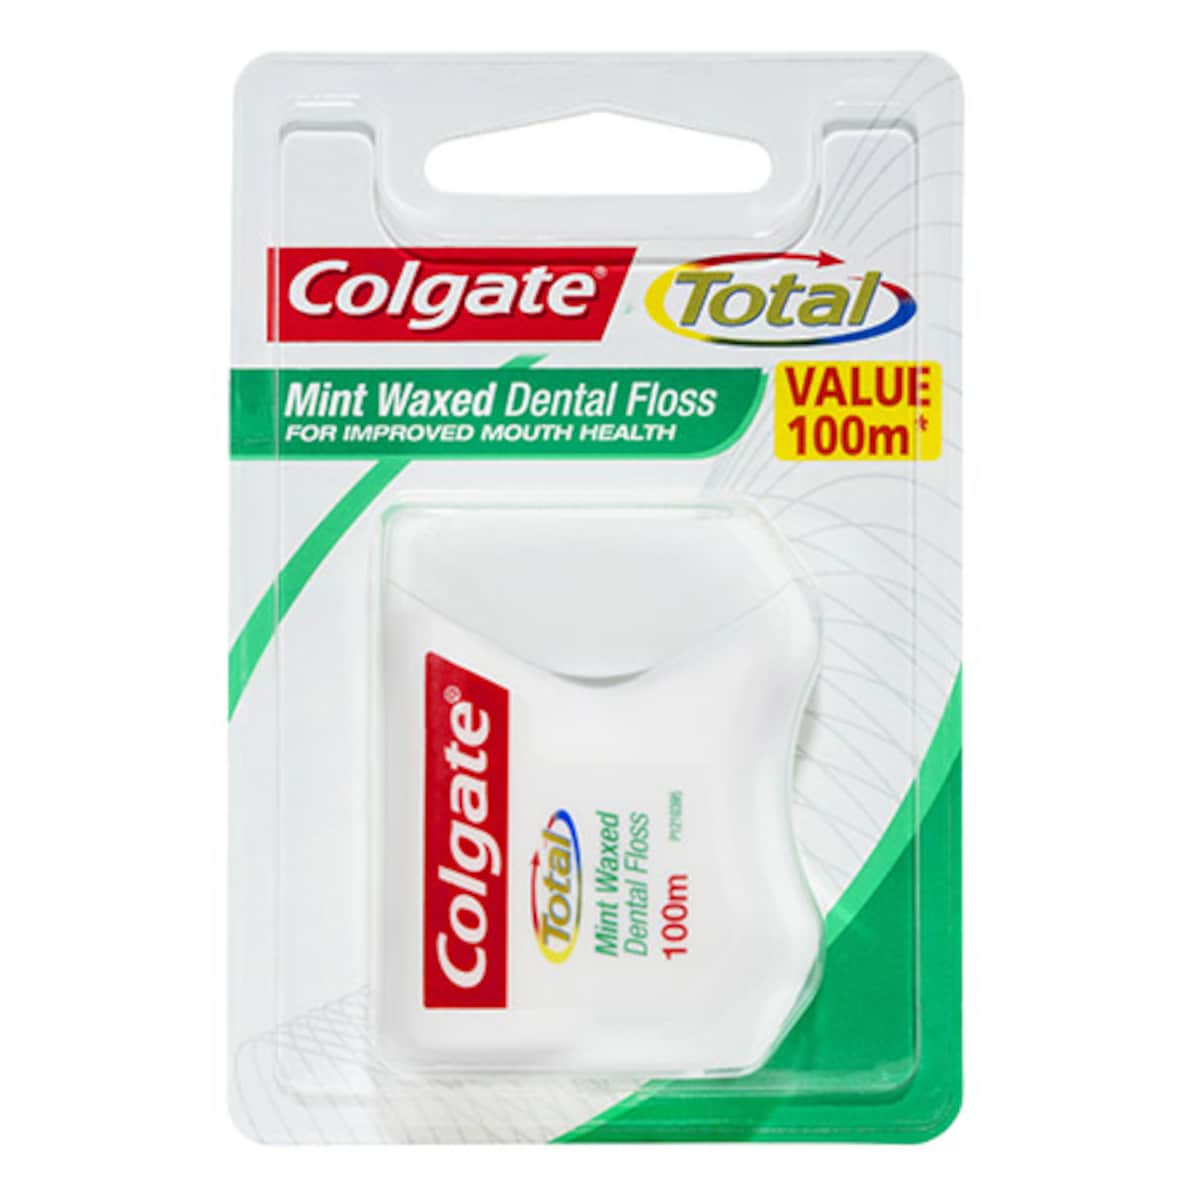 Colgate Total Mint Waxed Dental Floss 100m